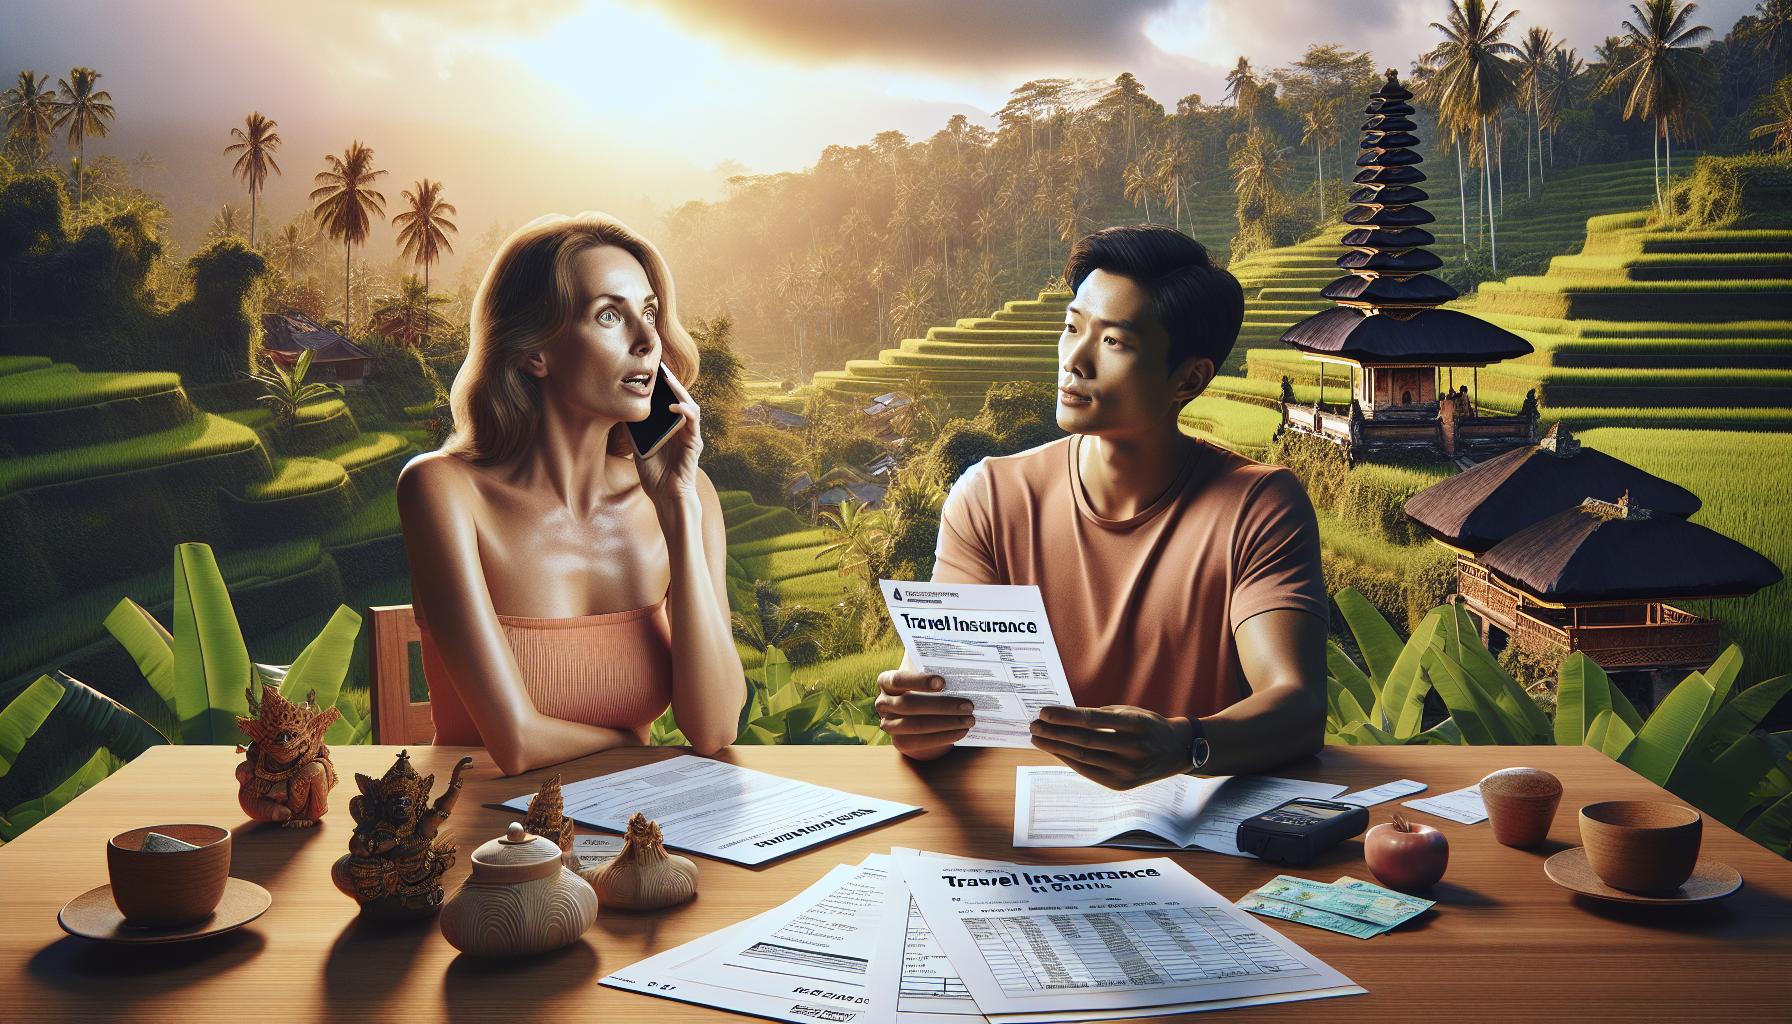 Bali expat health insurance choices artistic image